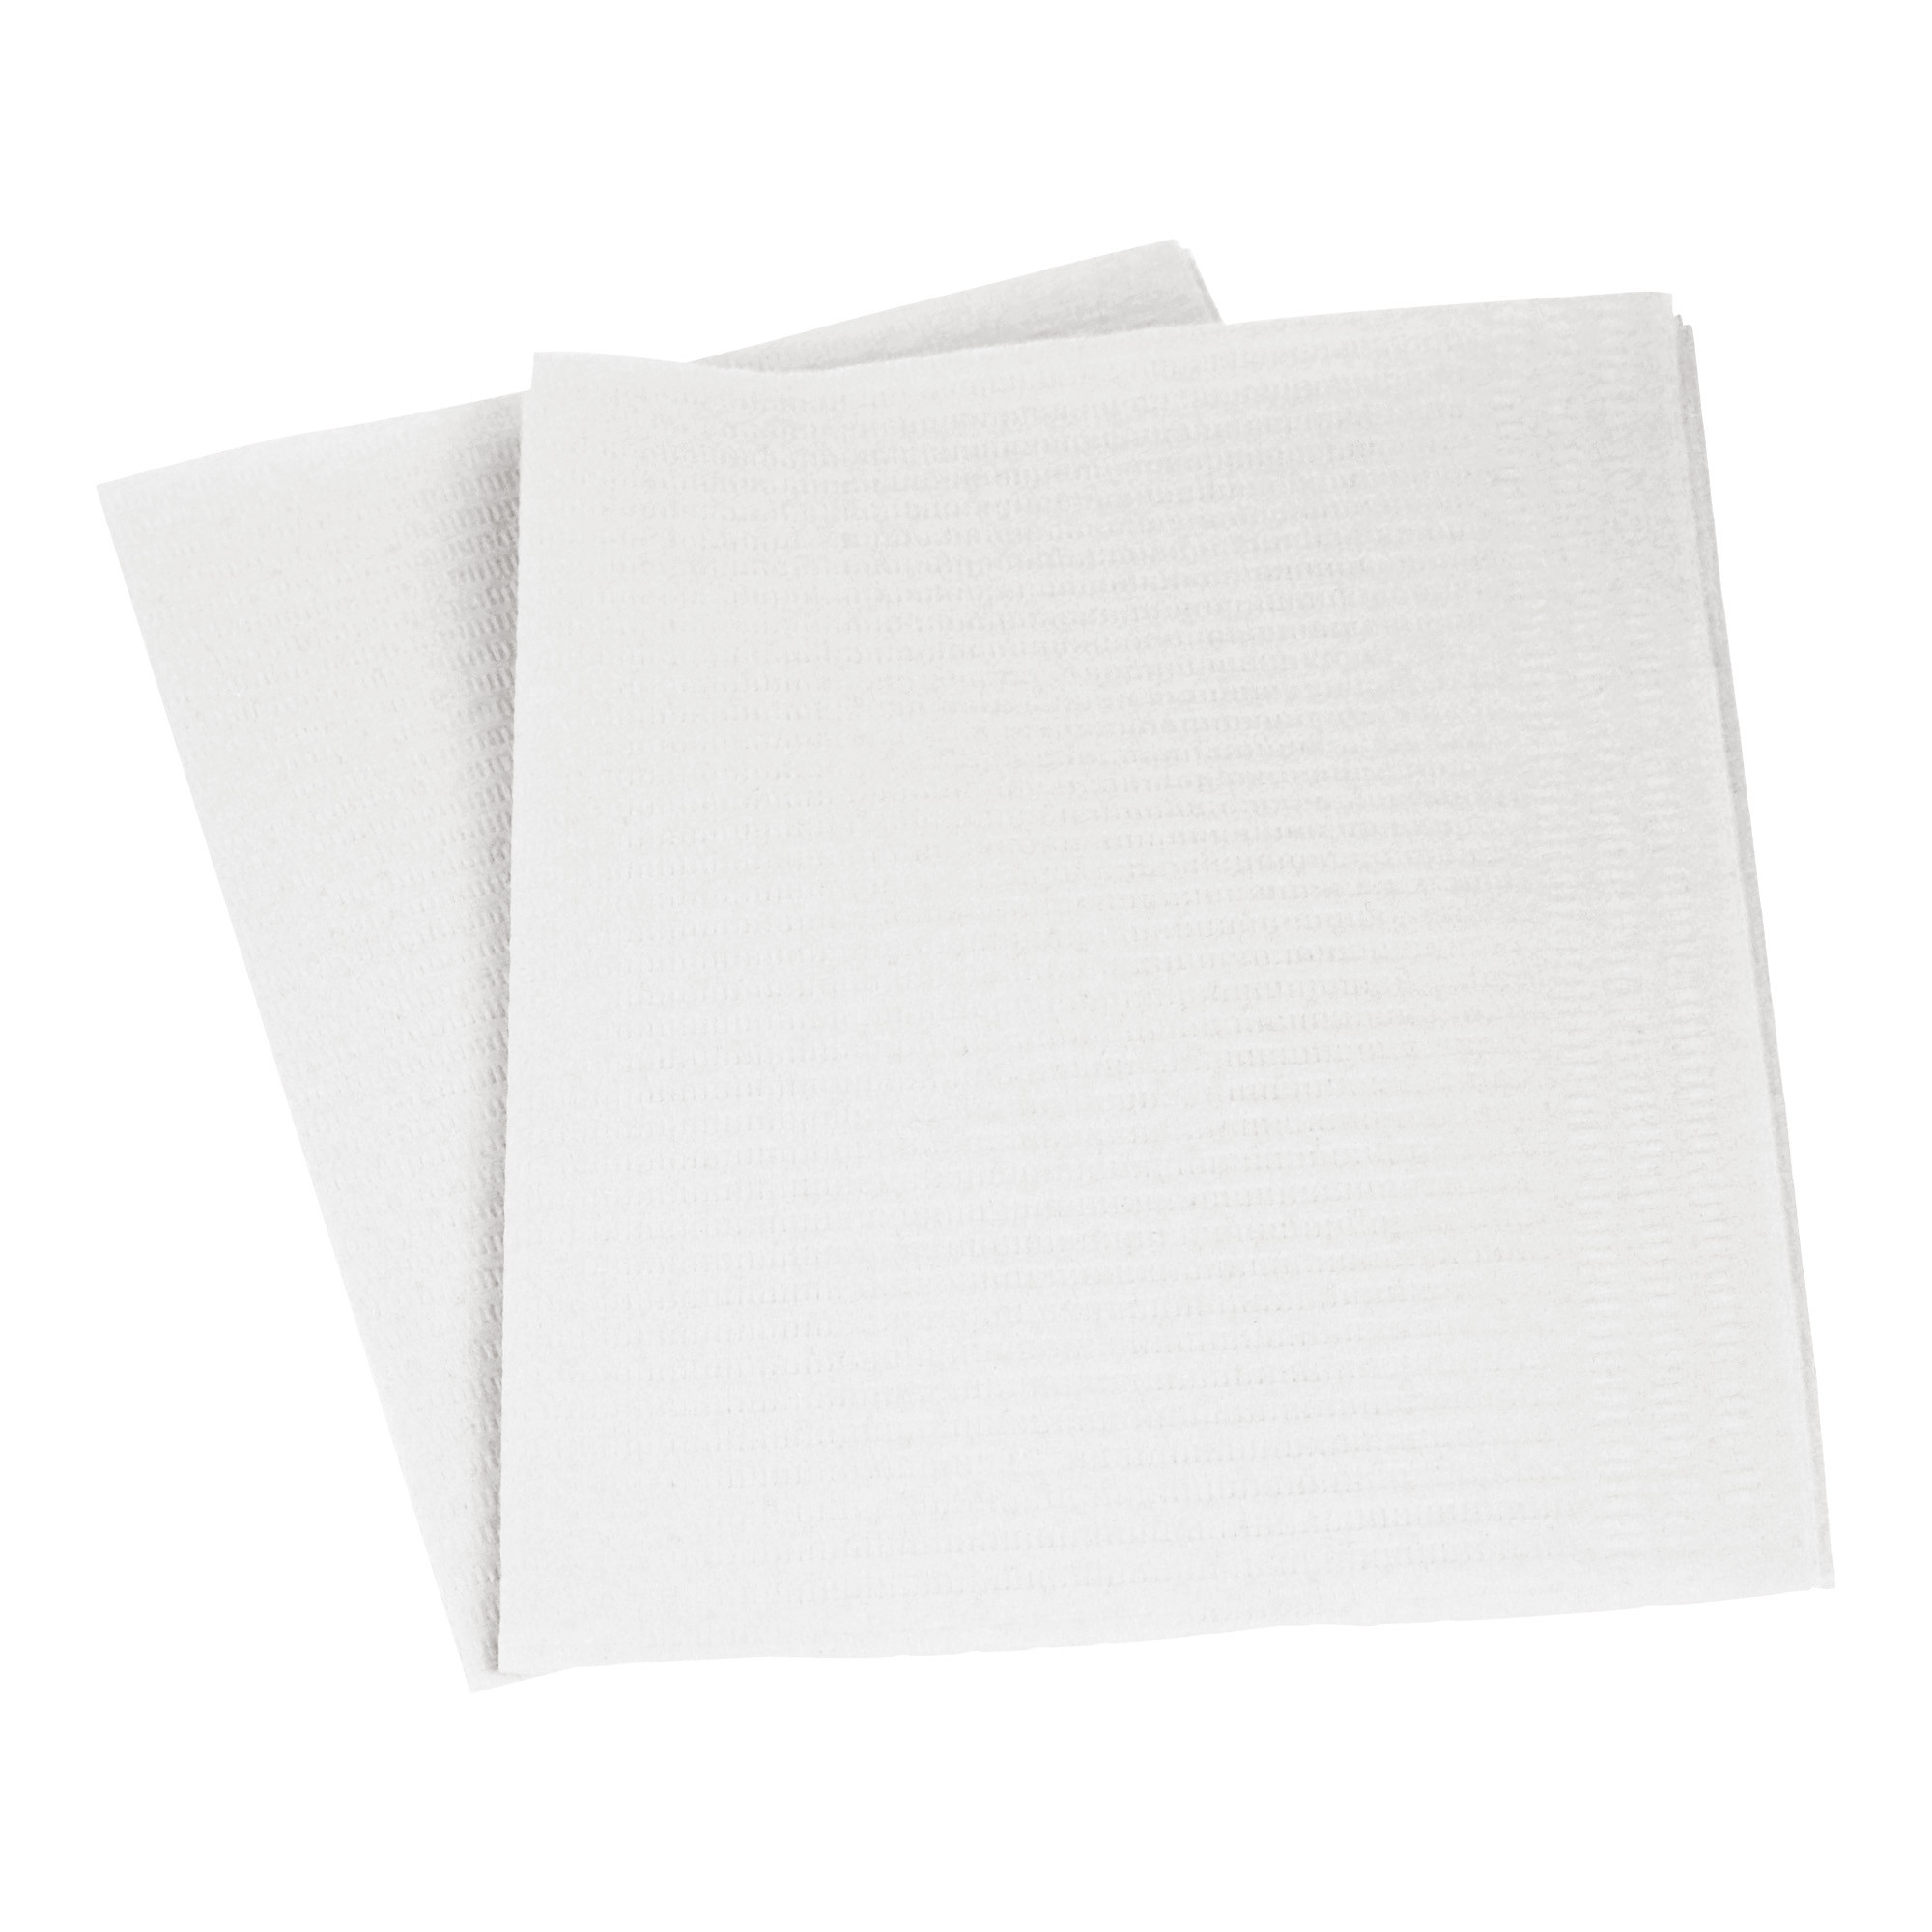 Disposable White absorbent and liquid resistant placemats 33 x 45 cm 500 pcs